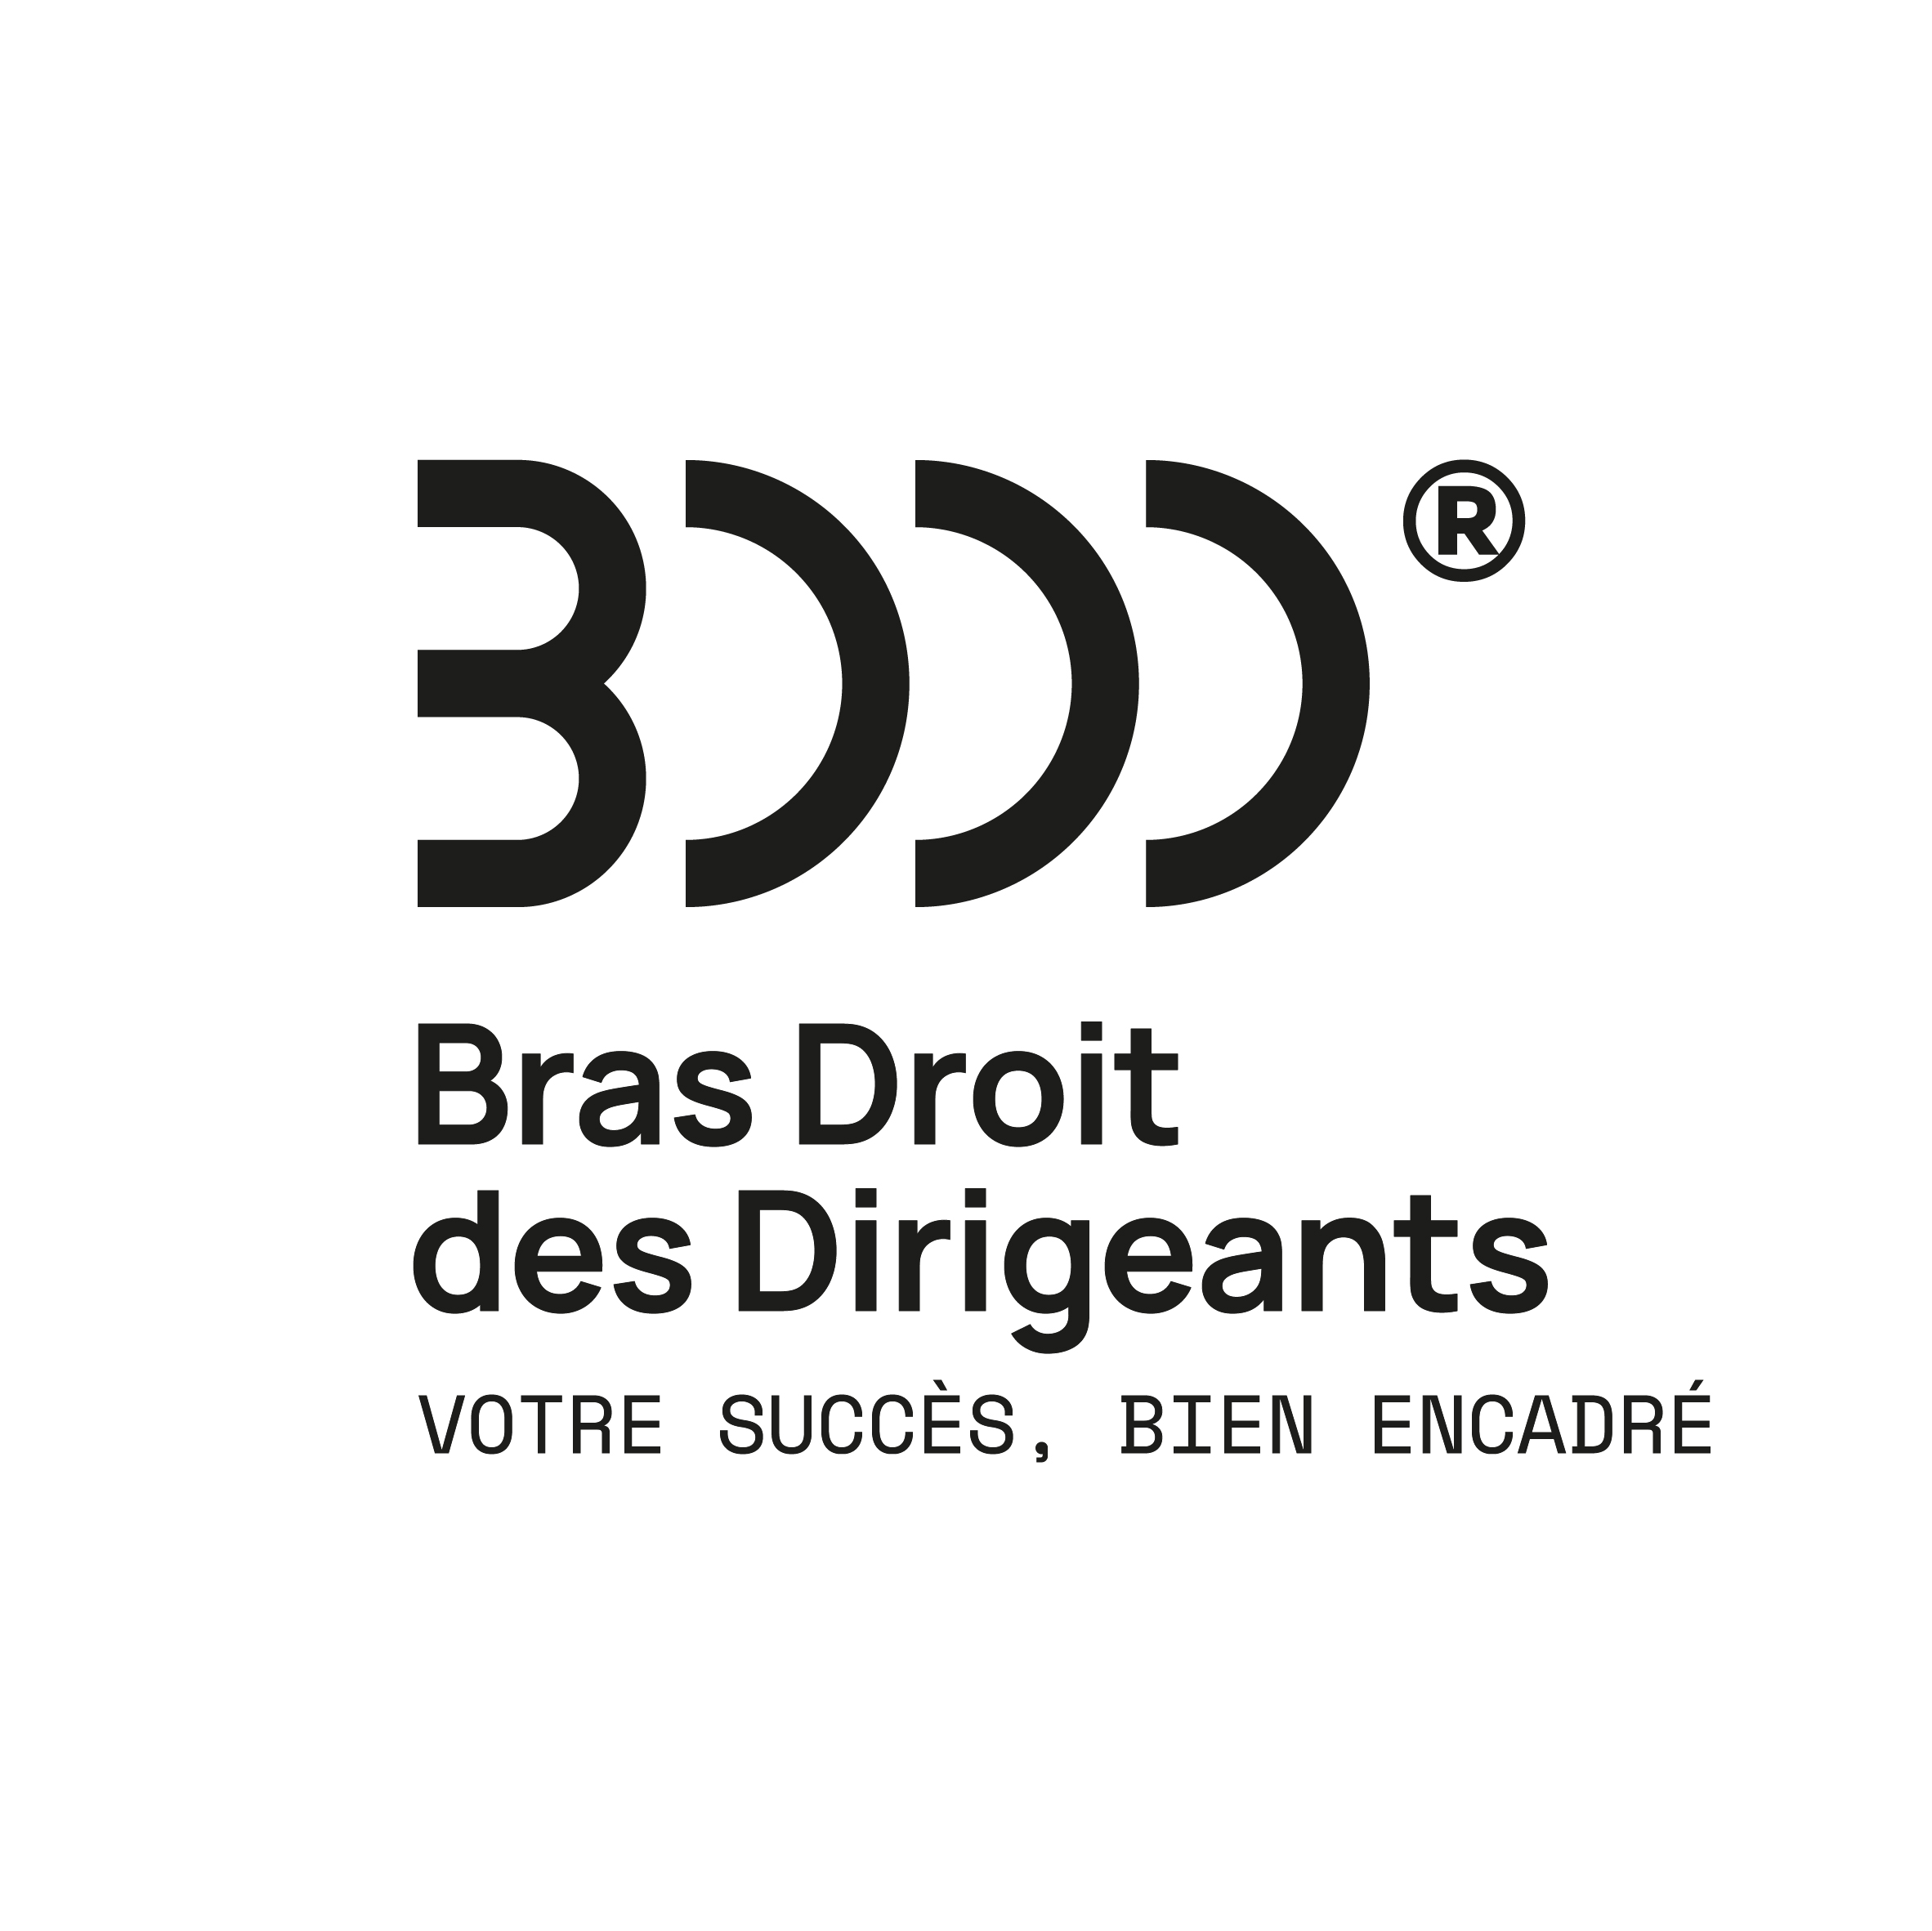 BDDD_Logos_carré_Corporate